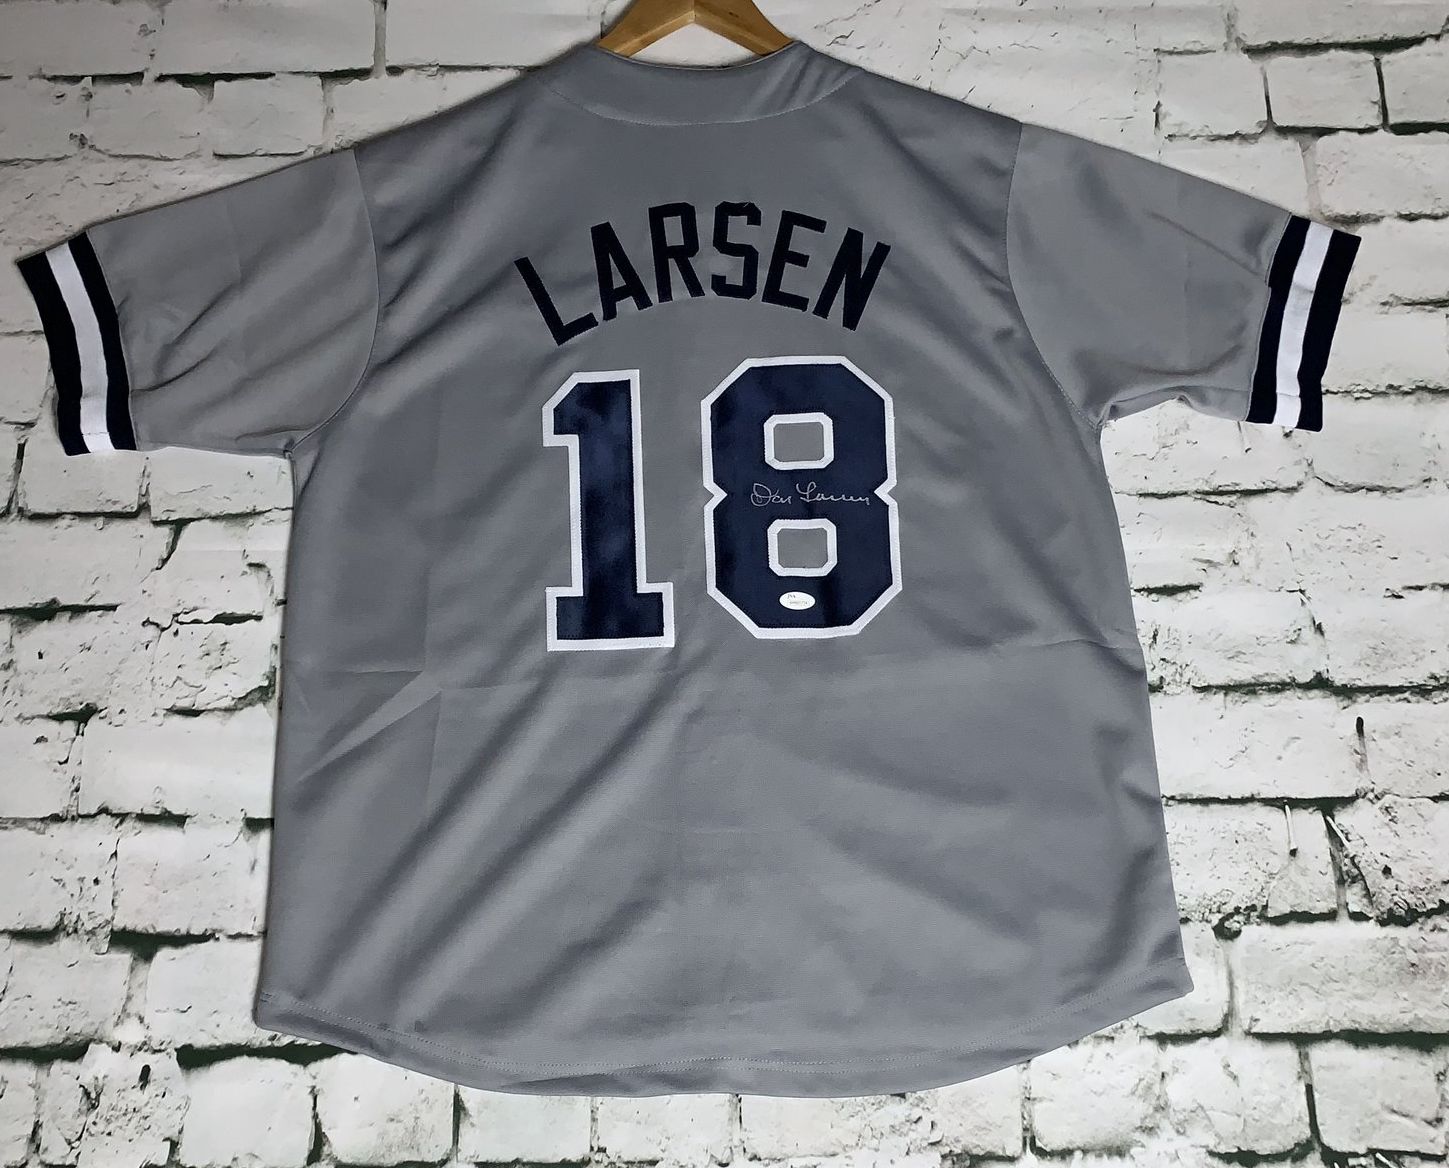 Don Larsen Signed Autographed New York Yankees Baseball Jersey (JSA CO –  Sterling Autographs